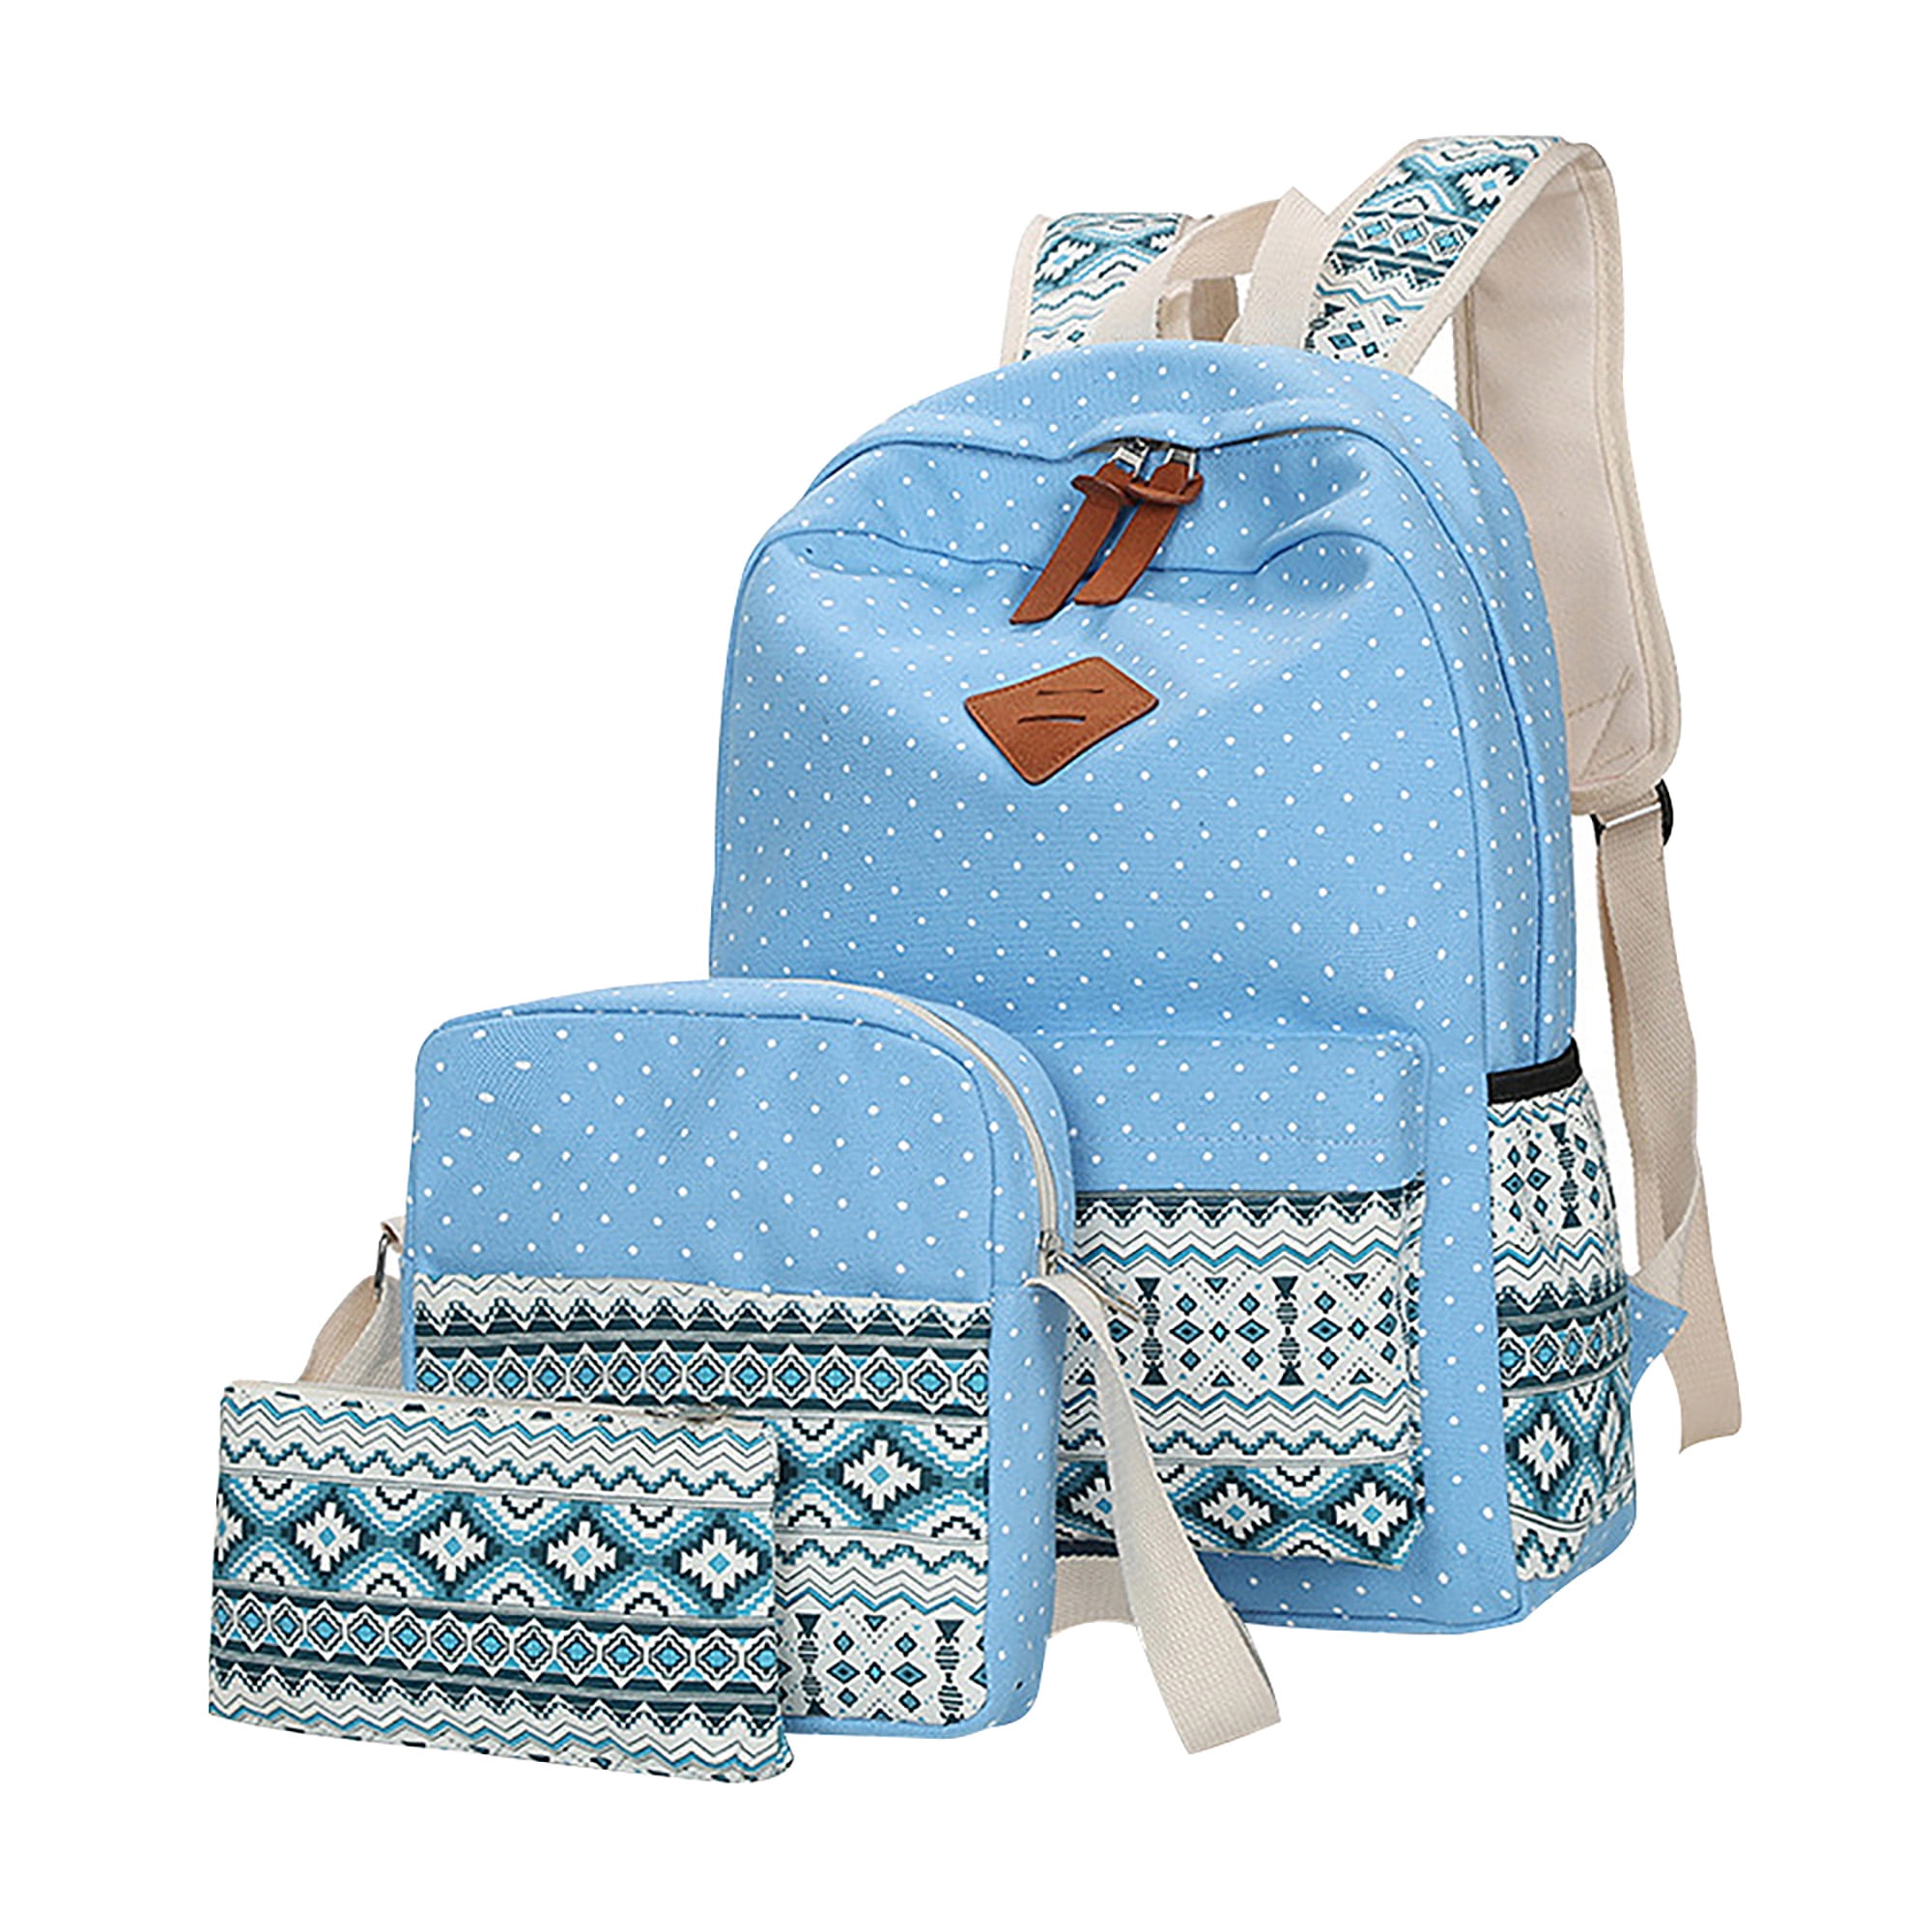 shoulder bag new leisure backpack middle school students schoolbag canvas travel backpack of